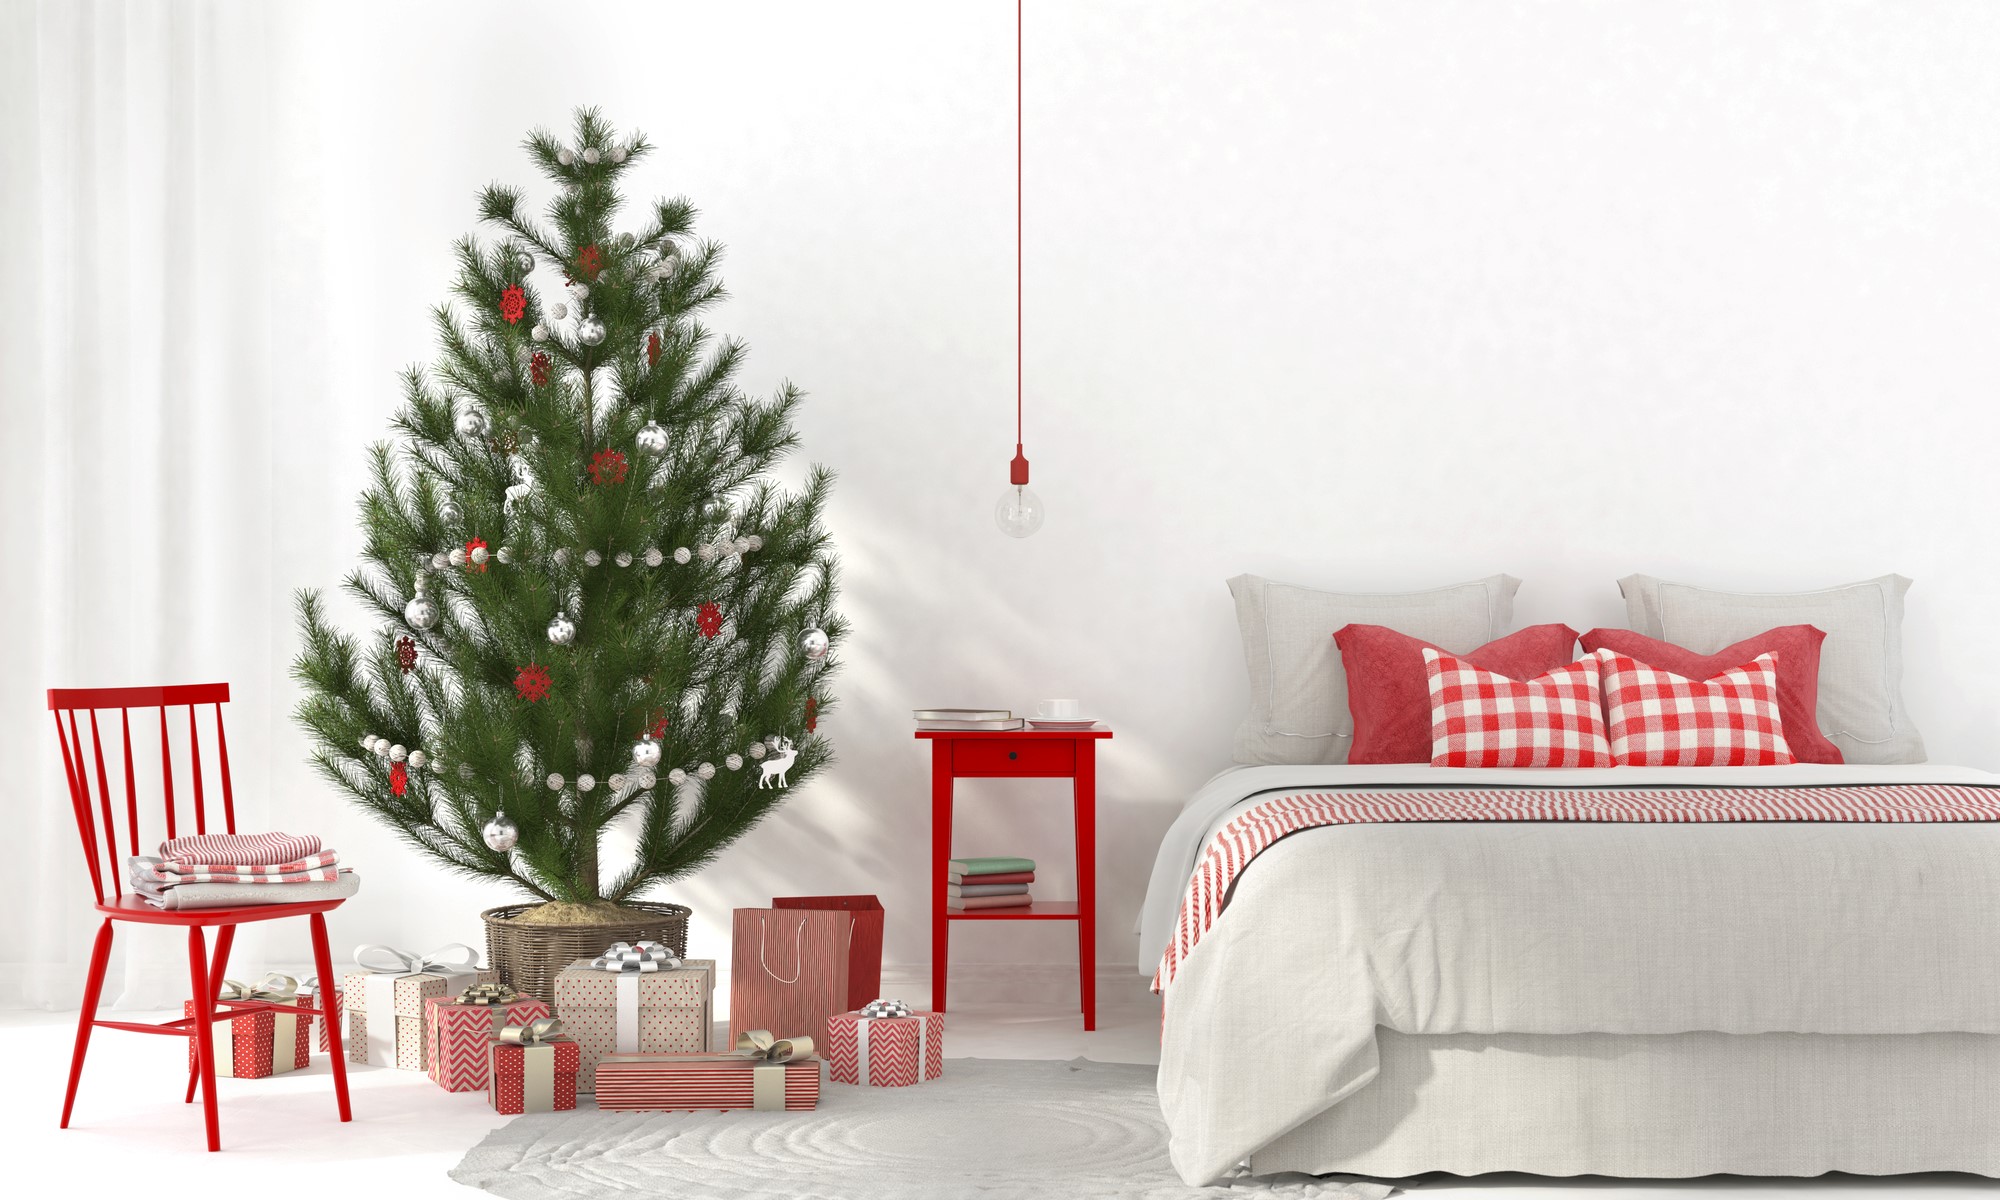 Mini trees make for the perfect Christmas bedroom decor ideas.